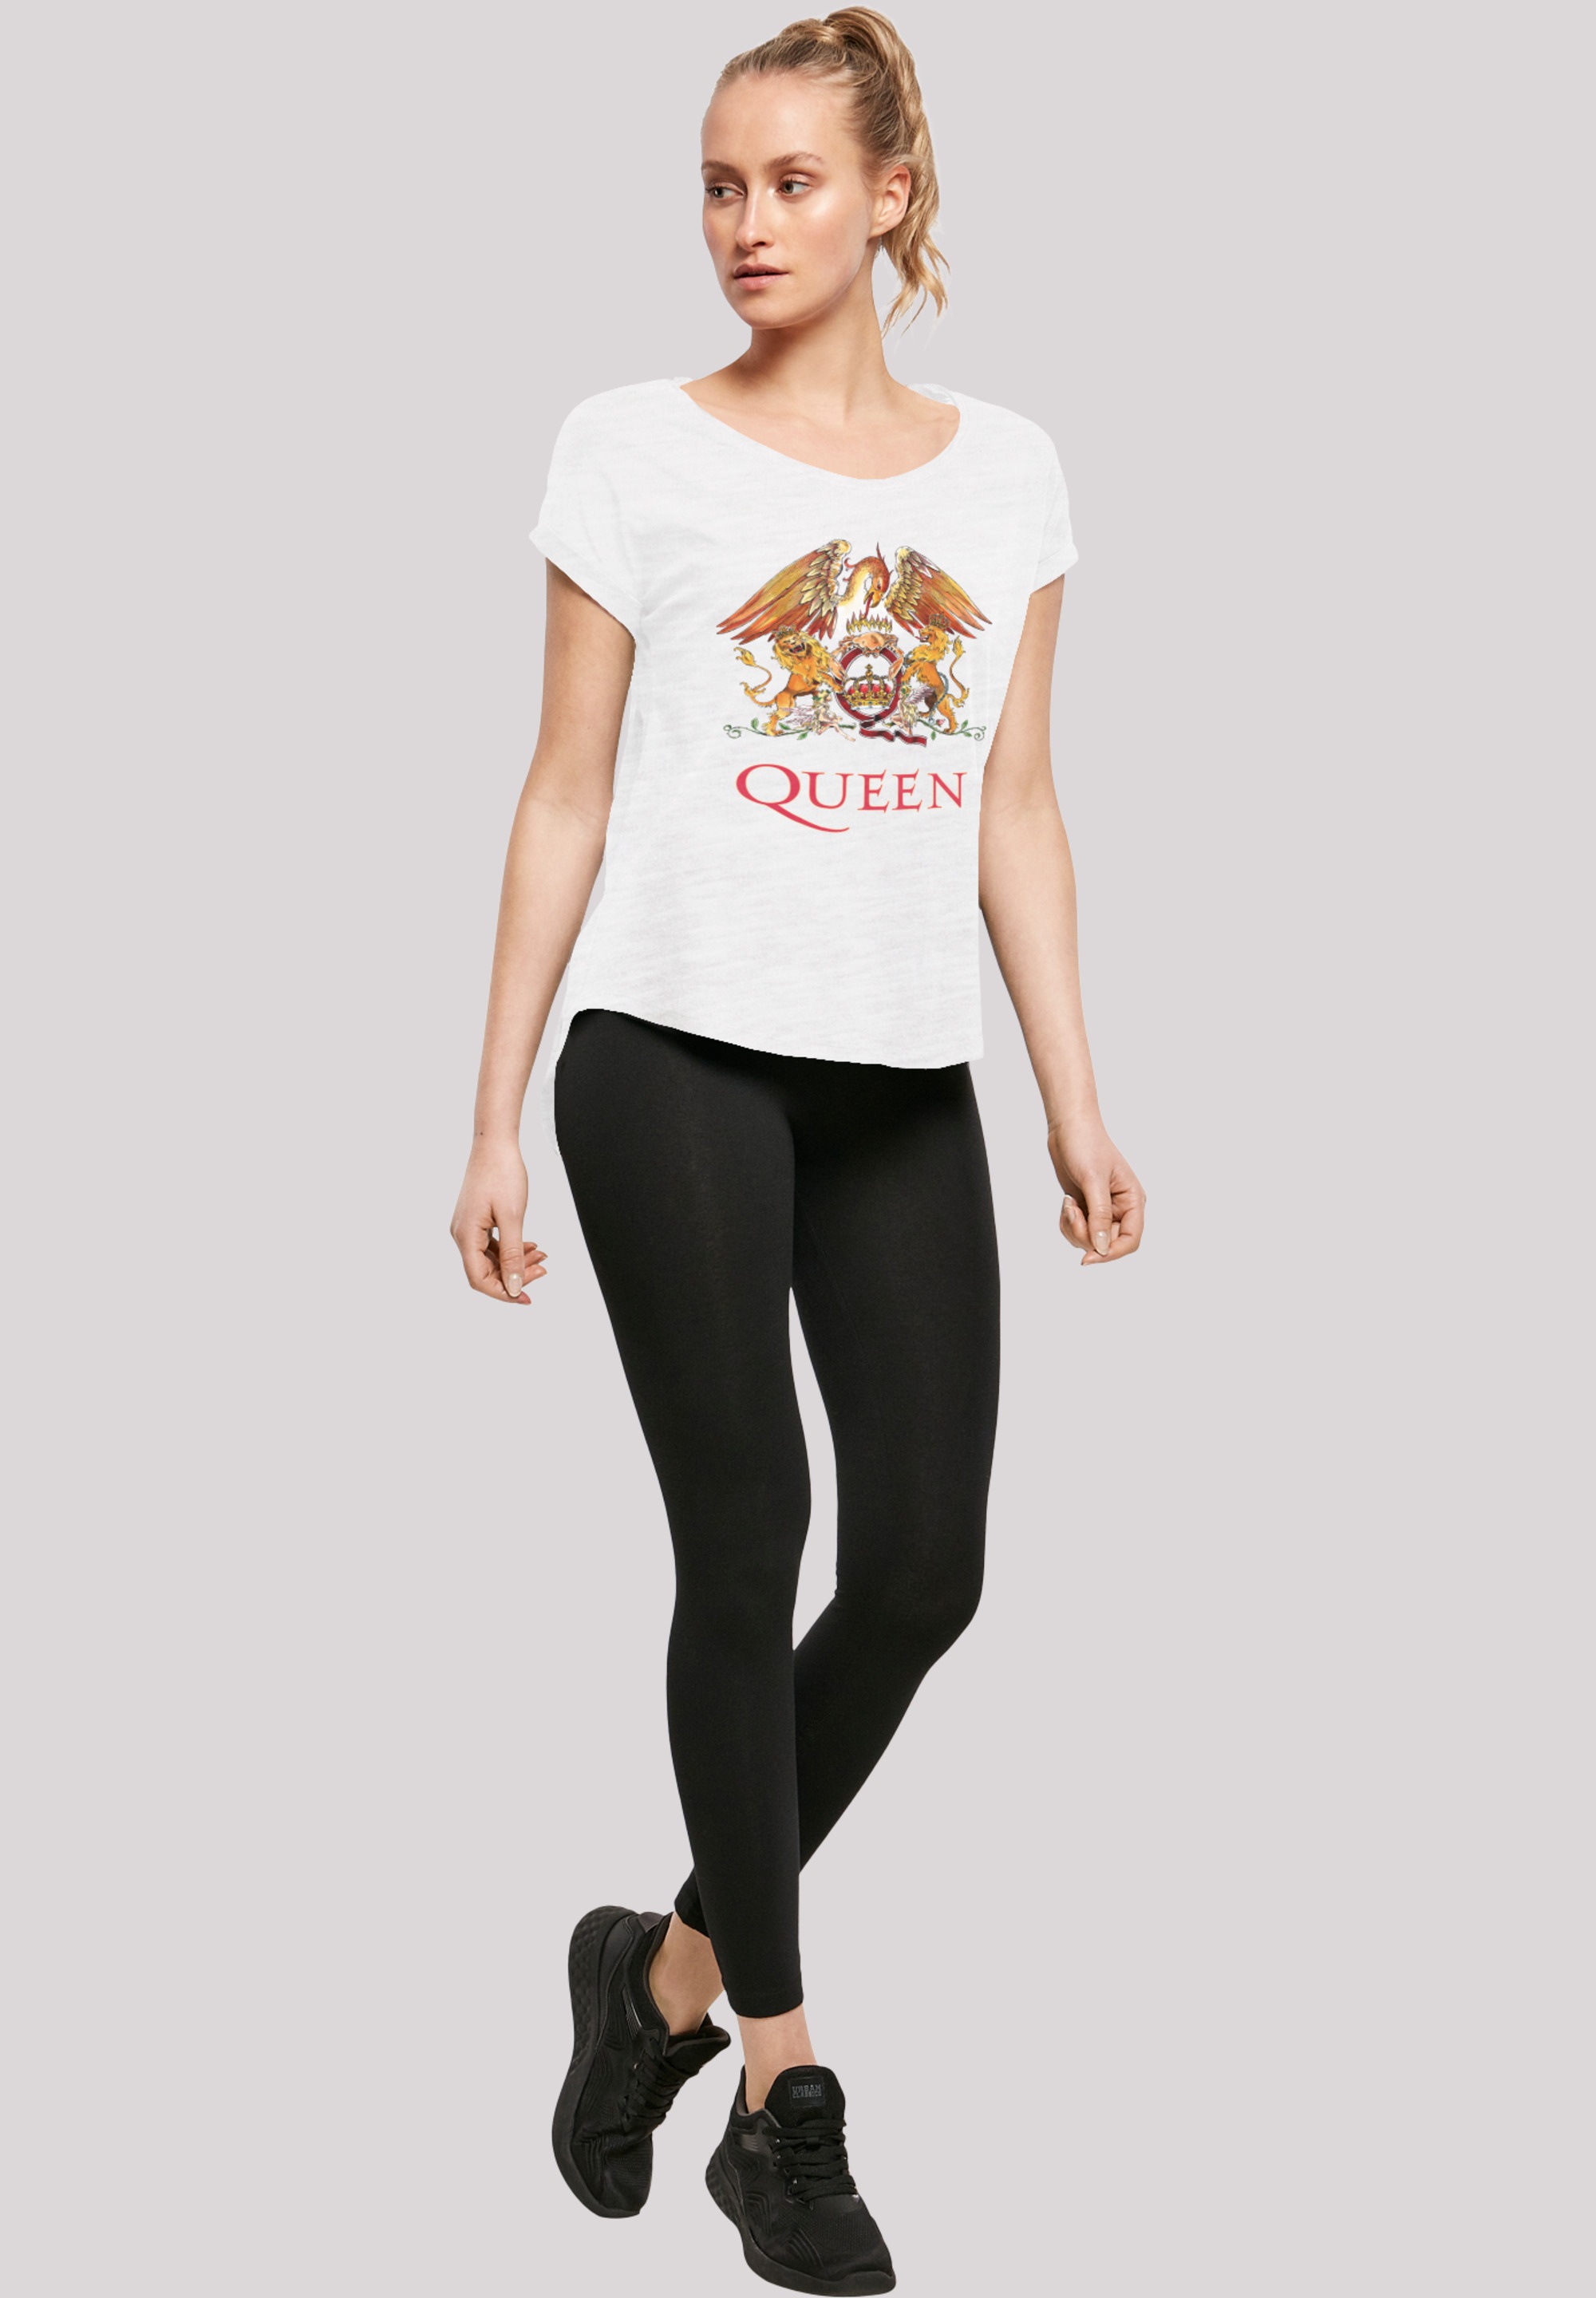 F4NT4STIC T-Shirt »Queen Rockband Classic Crest Black«, Print bestellen |  I\'m walking